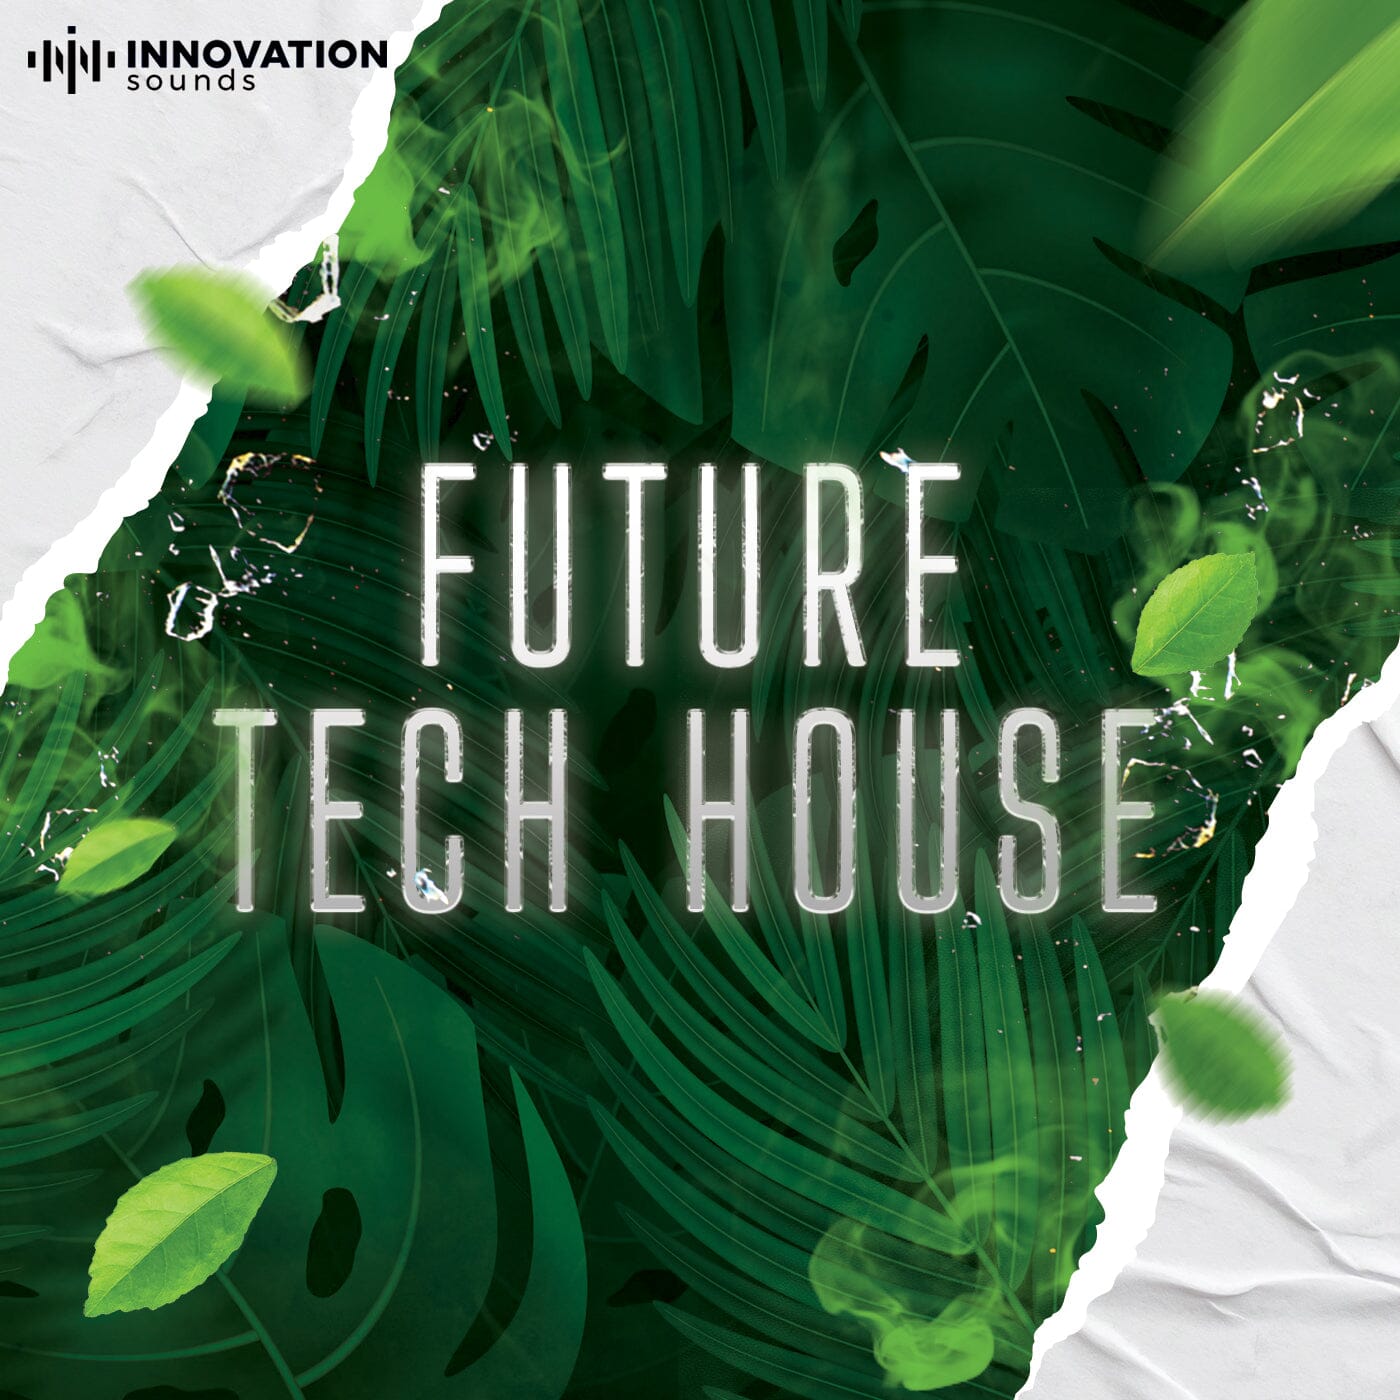 Future Tech House - Construction Kits (Wav - Midi files) Sample Pack Innovation Sounds